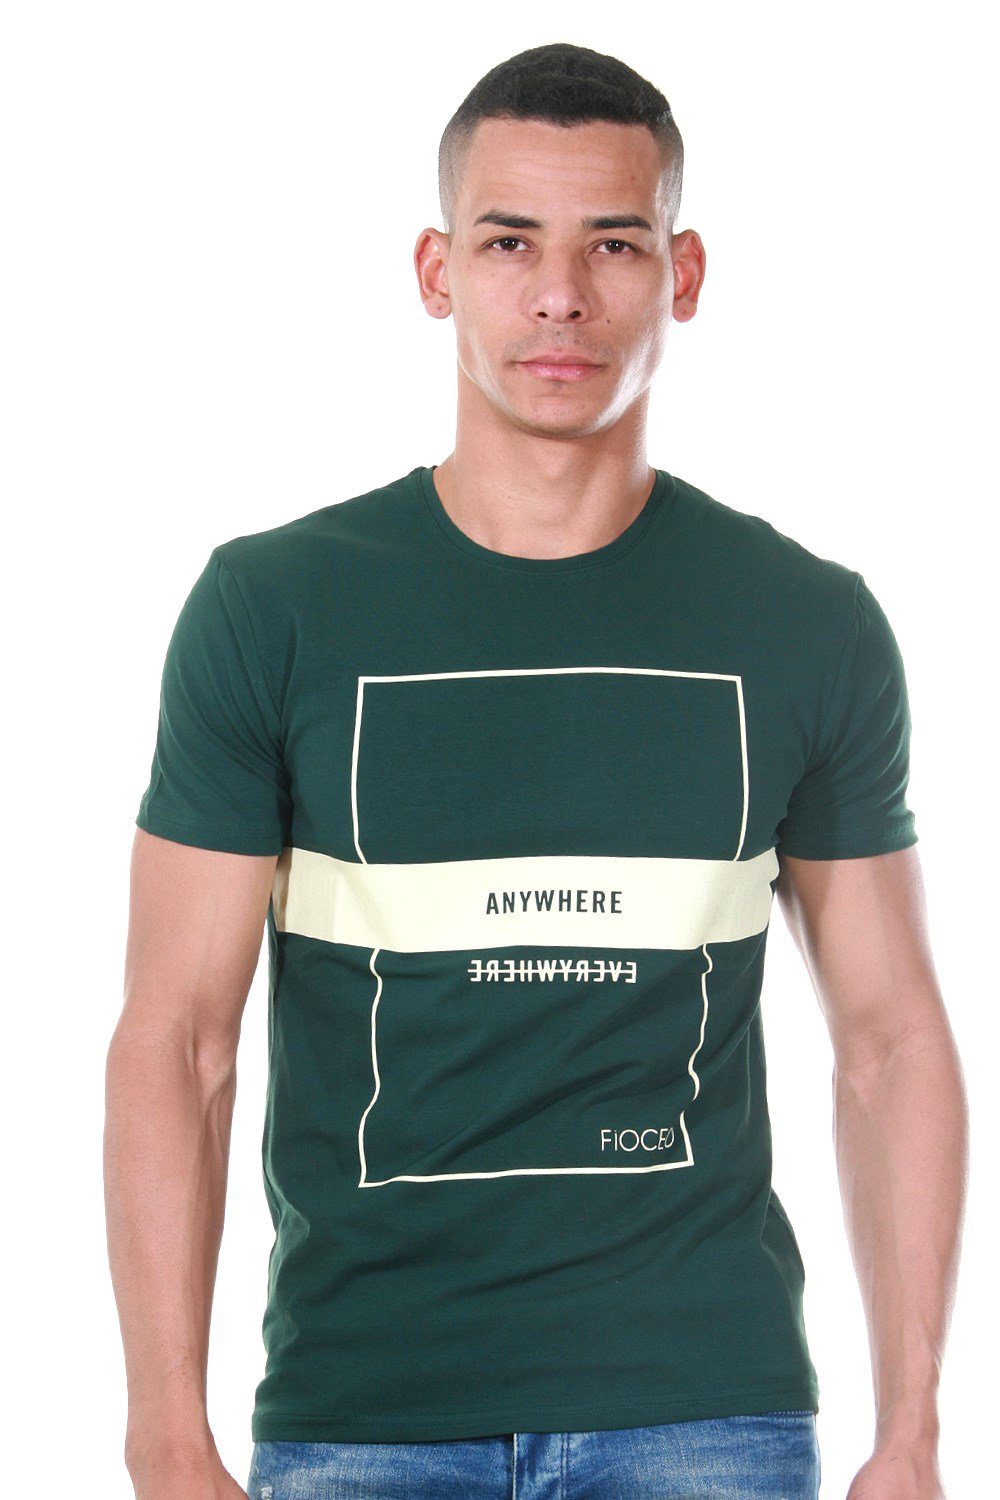 FIOCEO Rundhalsshirt grün | T-Shirts